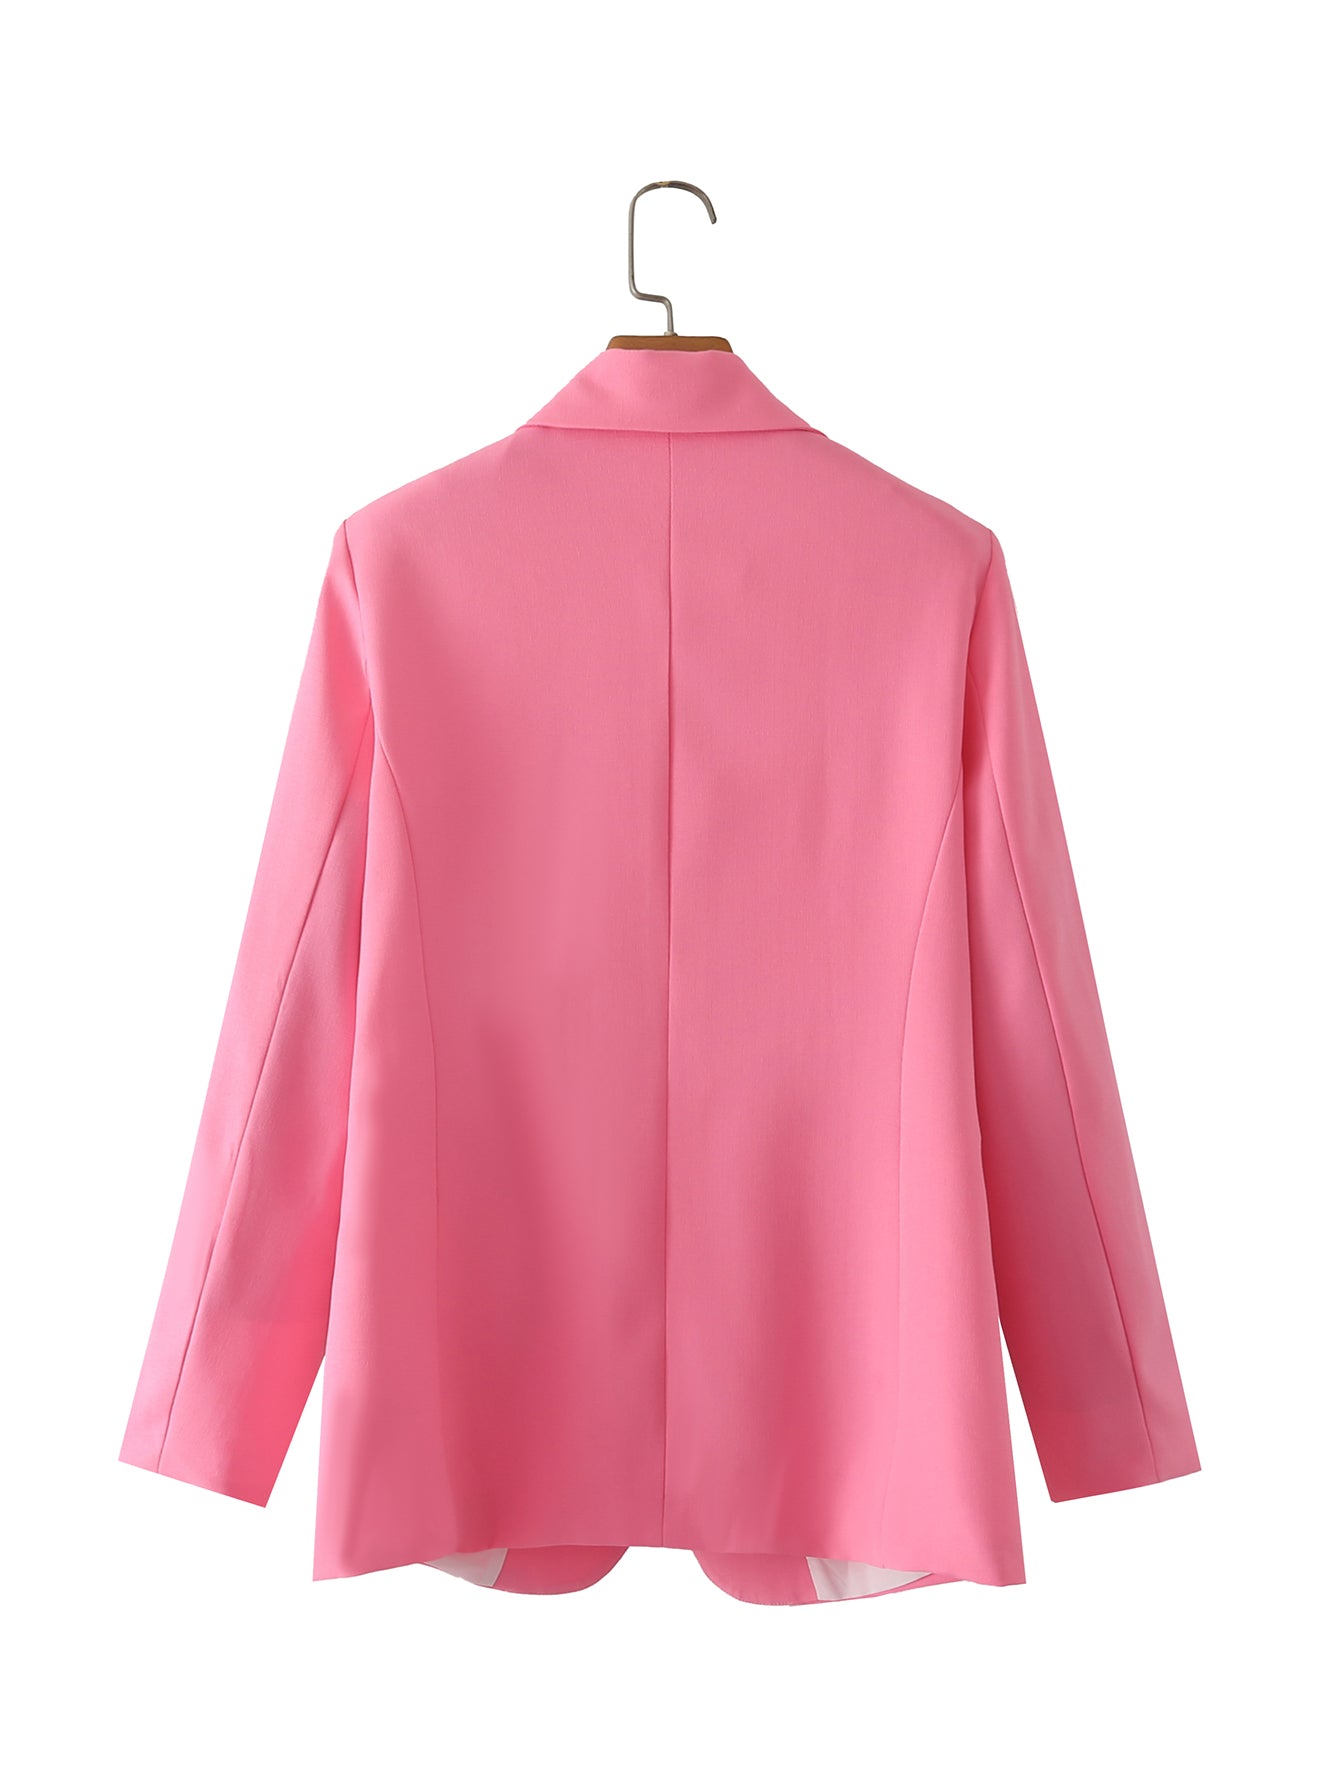 Spring Autumn Oblique Buckle Multi-Button Irregular Asymmetric Pink Blazer Women Sweet Loose Top